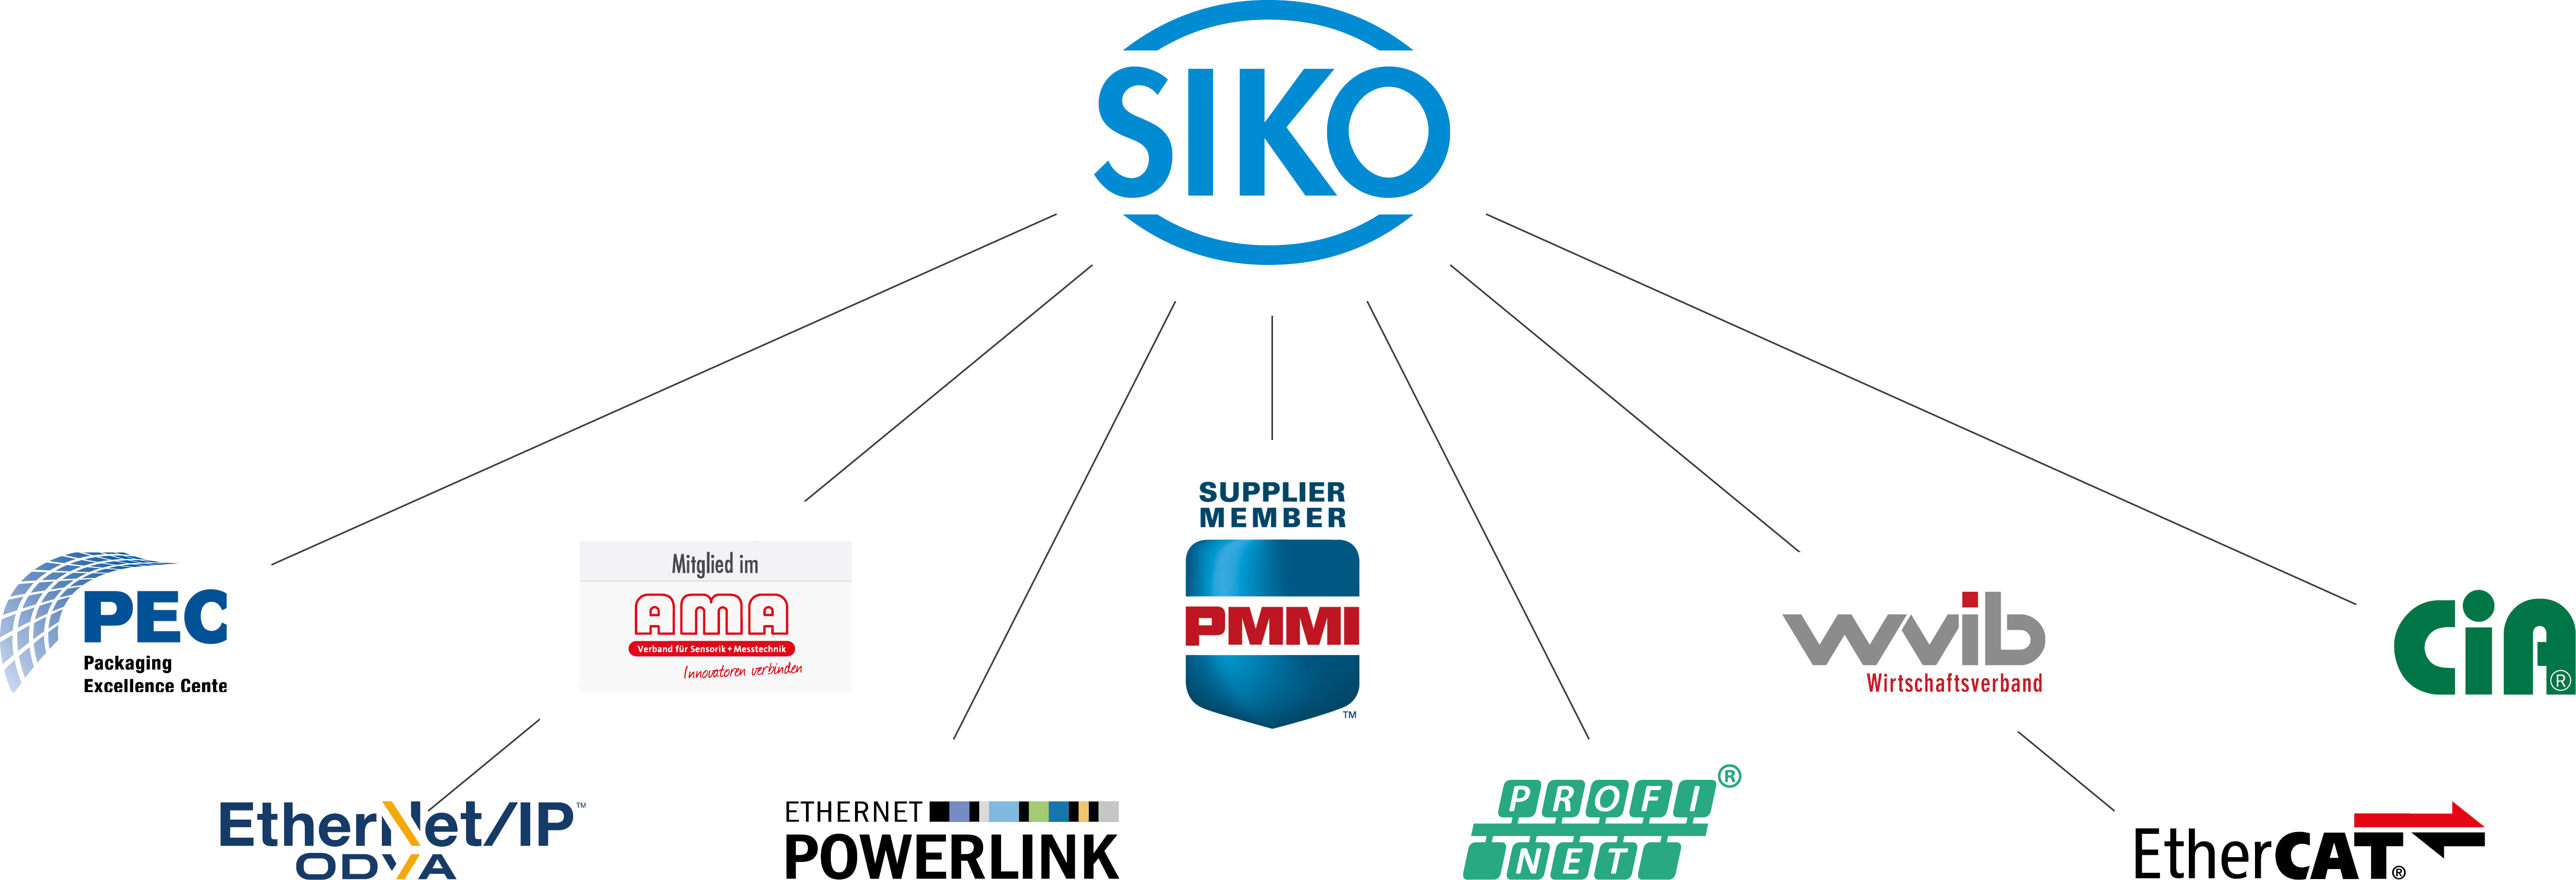 SIKO 是成员的公司网络和用户组织的标志